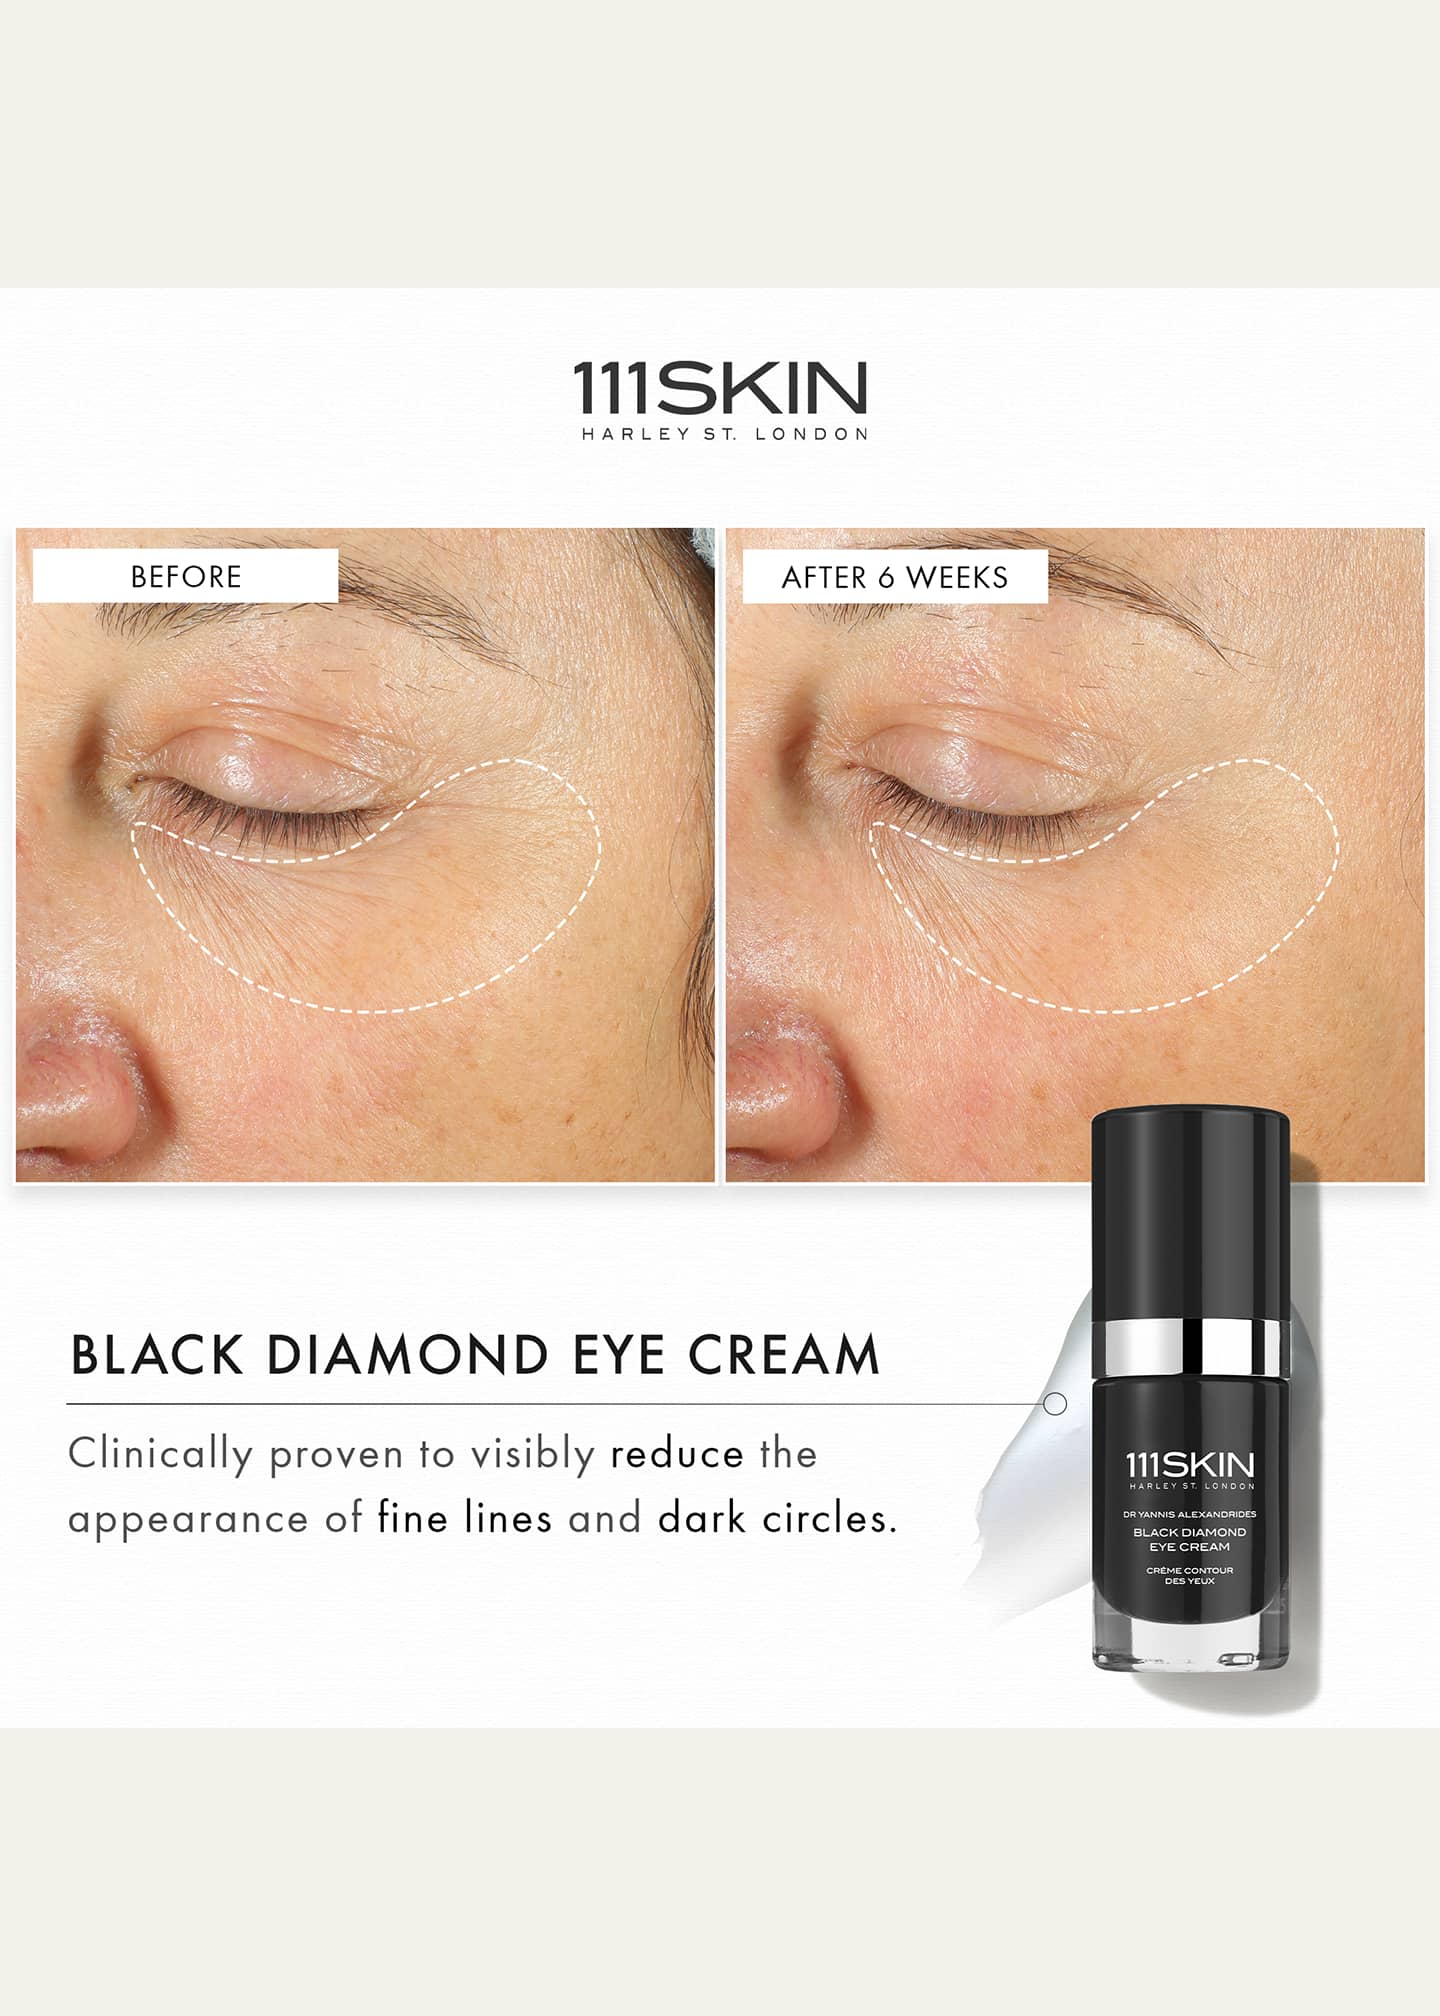 111SKIN Black Diamond Eye Cream Image 4 of 5